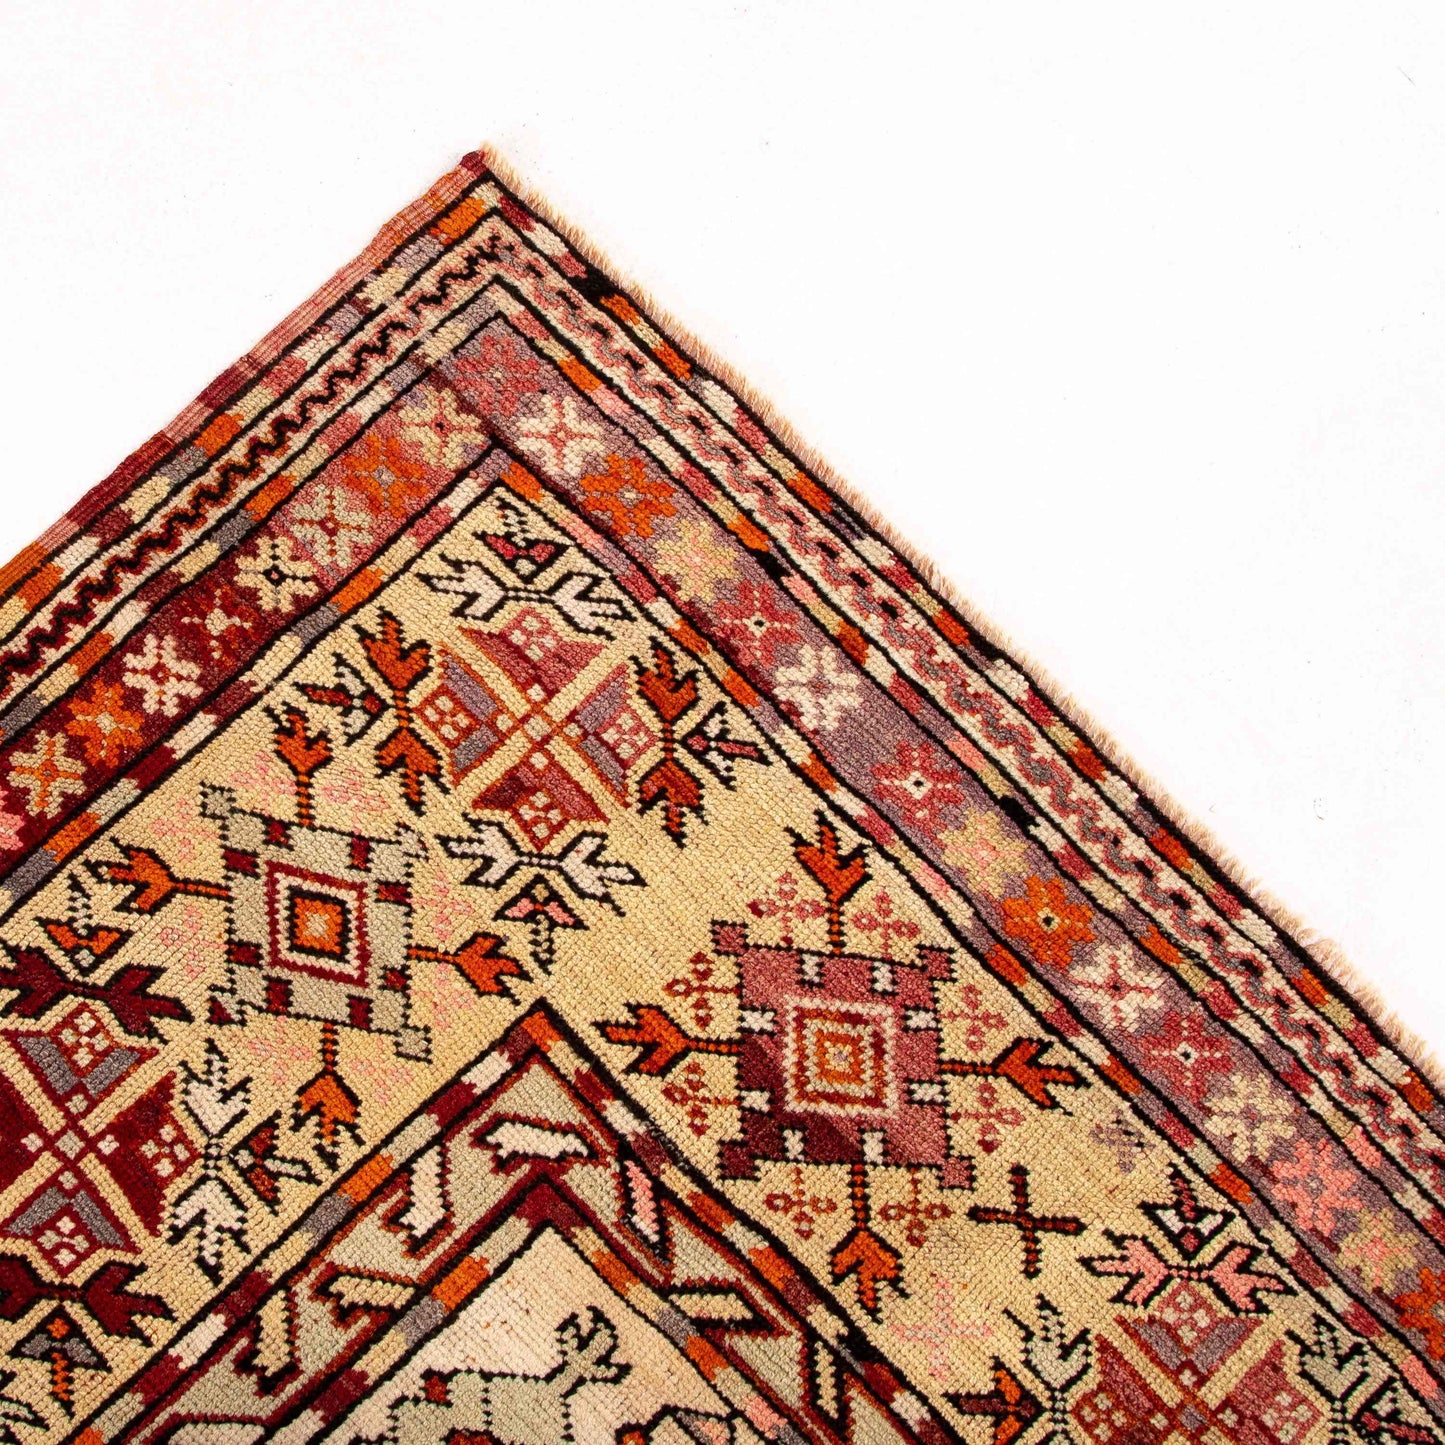 Oriental Rug Anatolian Handwoven Wool On Wool 131 x 170 Cm - 4' 4'' x 5' 7'' Red C014 ER01